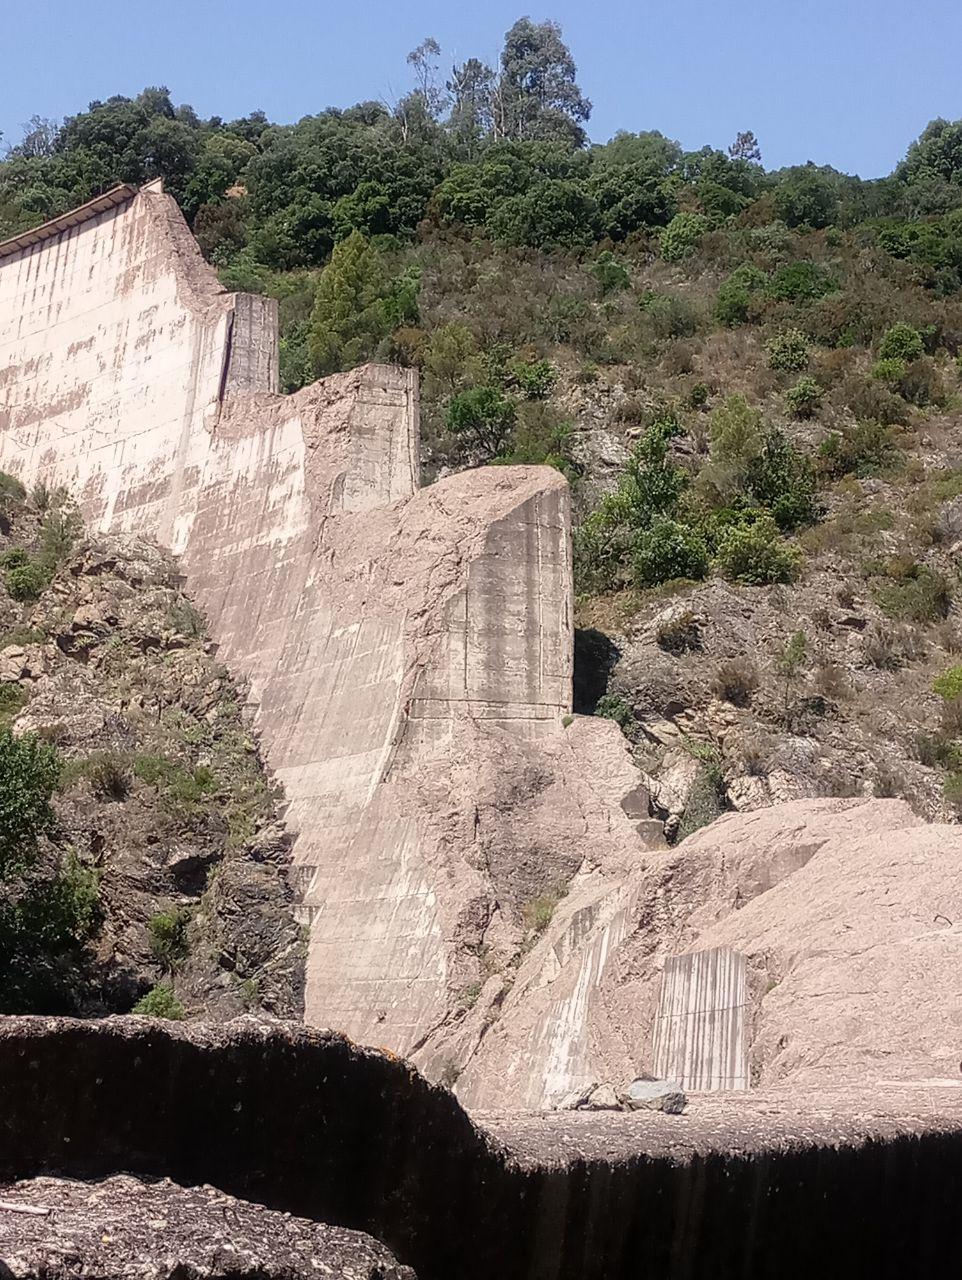 Part of the ruins of the Malpasset dam